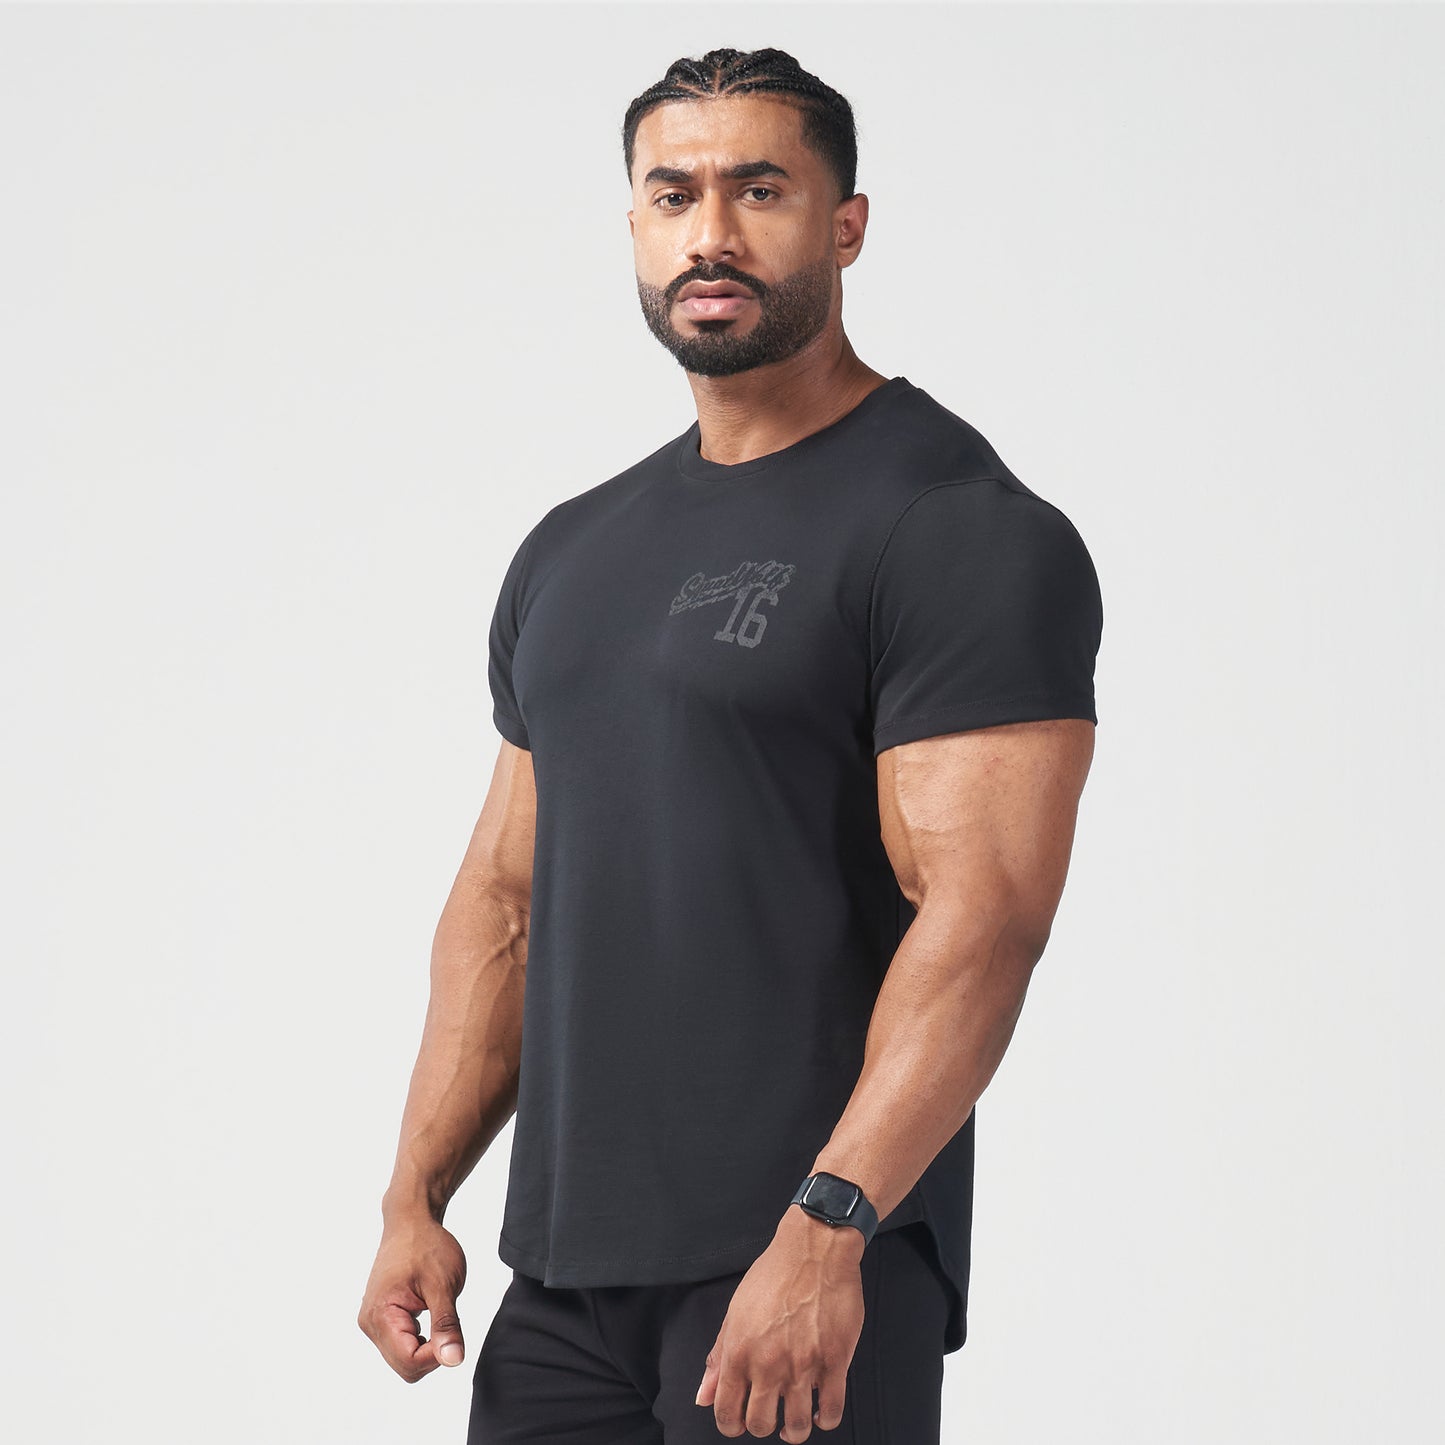 squatwolf-gym-wear-golden-era-retro-muscle-tee-black-workout-shirts-for-men